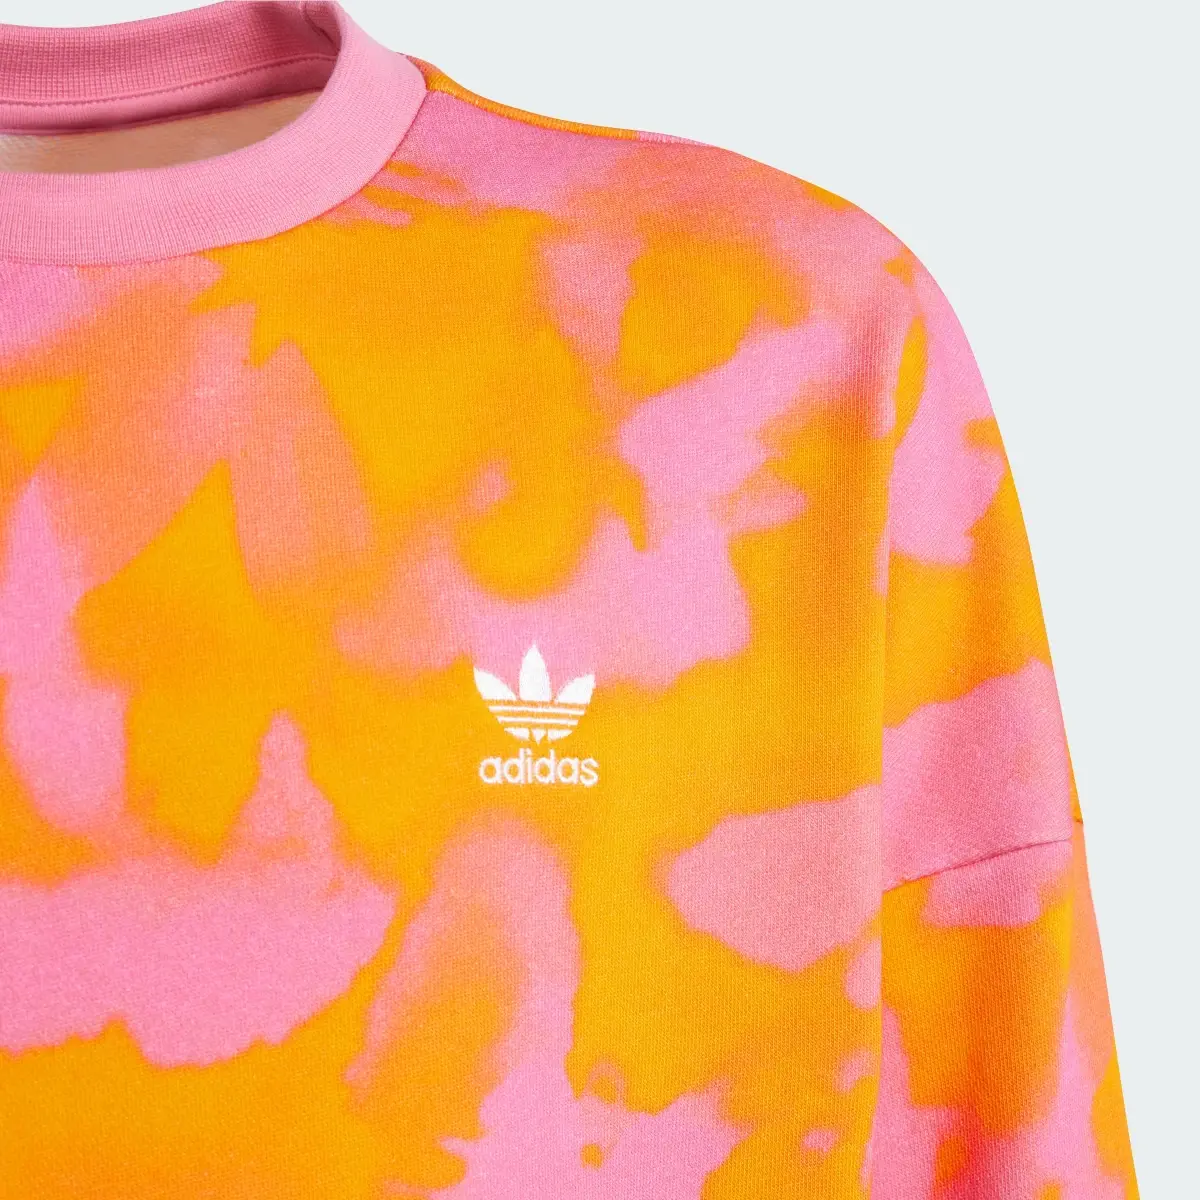 Adidas Summer Allover Print Sweatshirt. 3